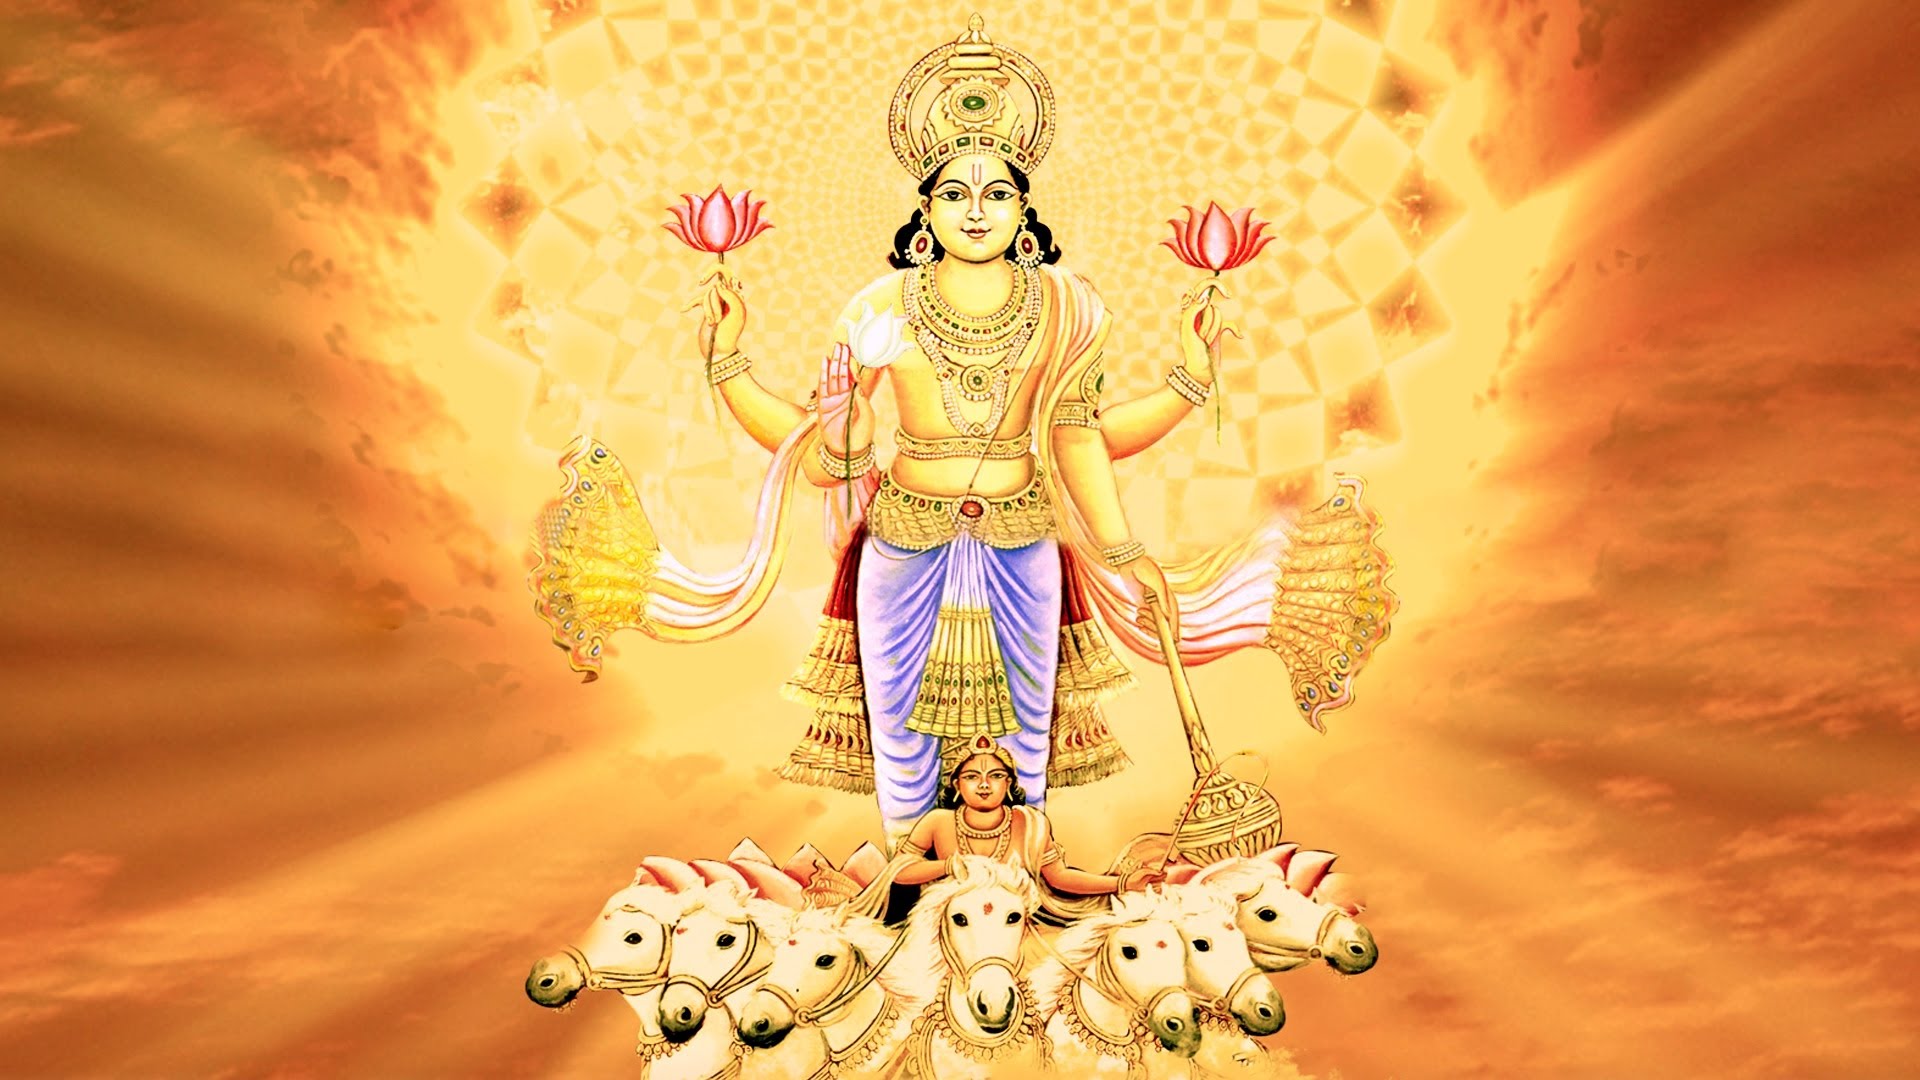 Lord Surya dev image